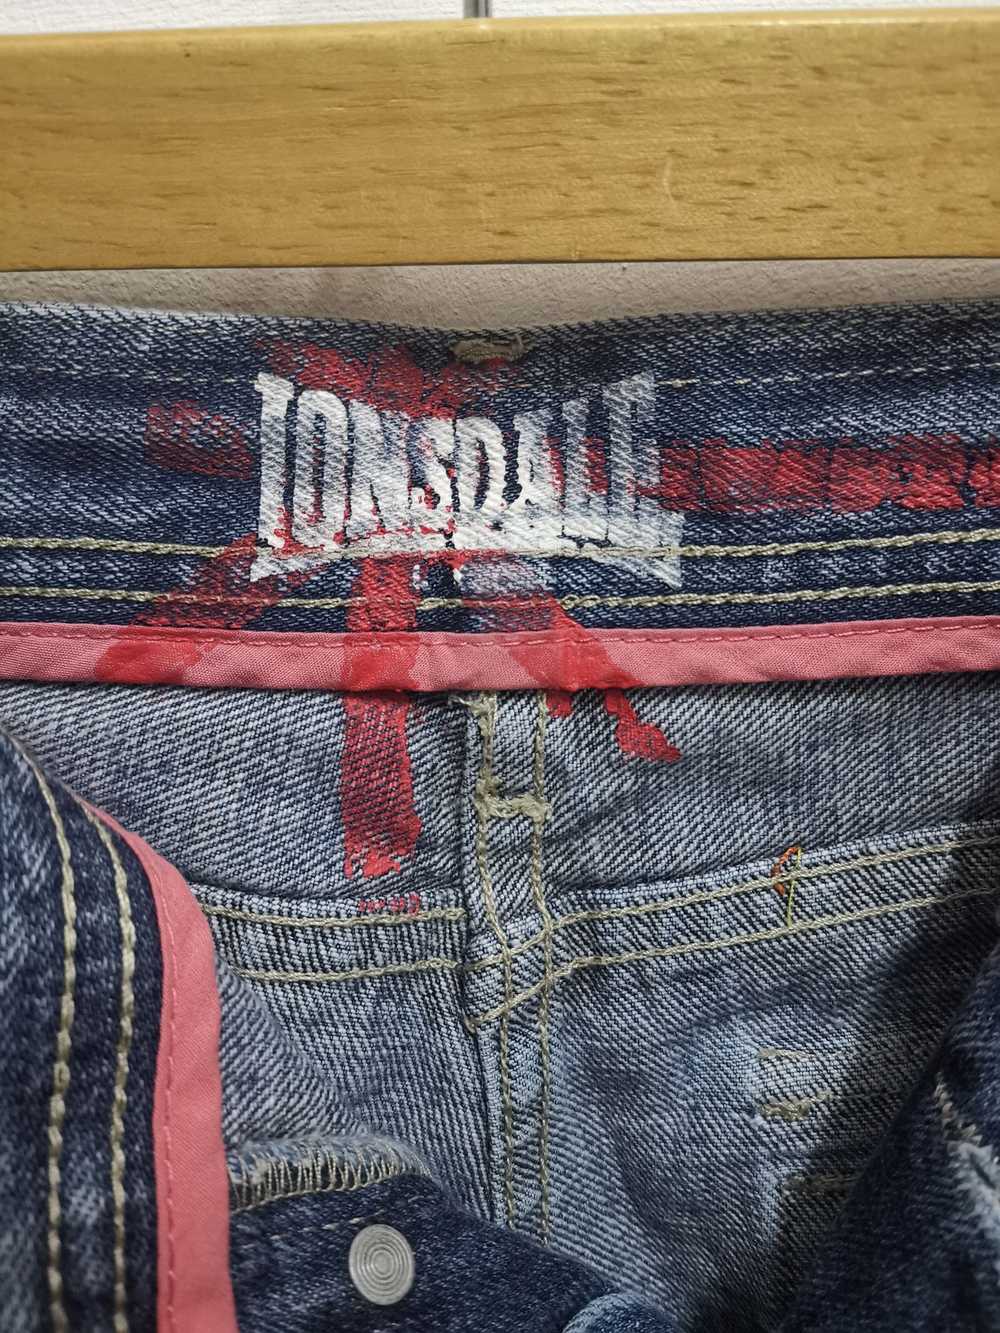 Lonsdale Lonsdale jeans - image 6